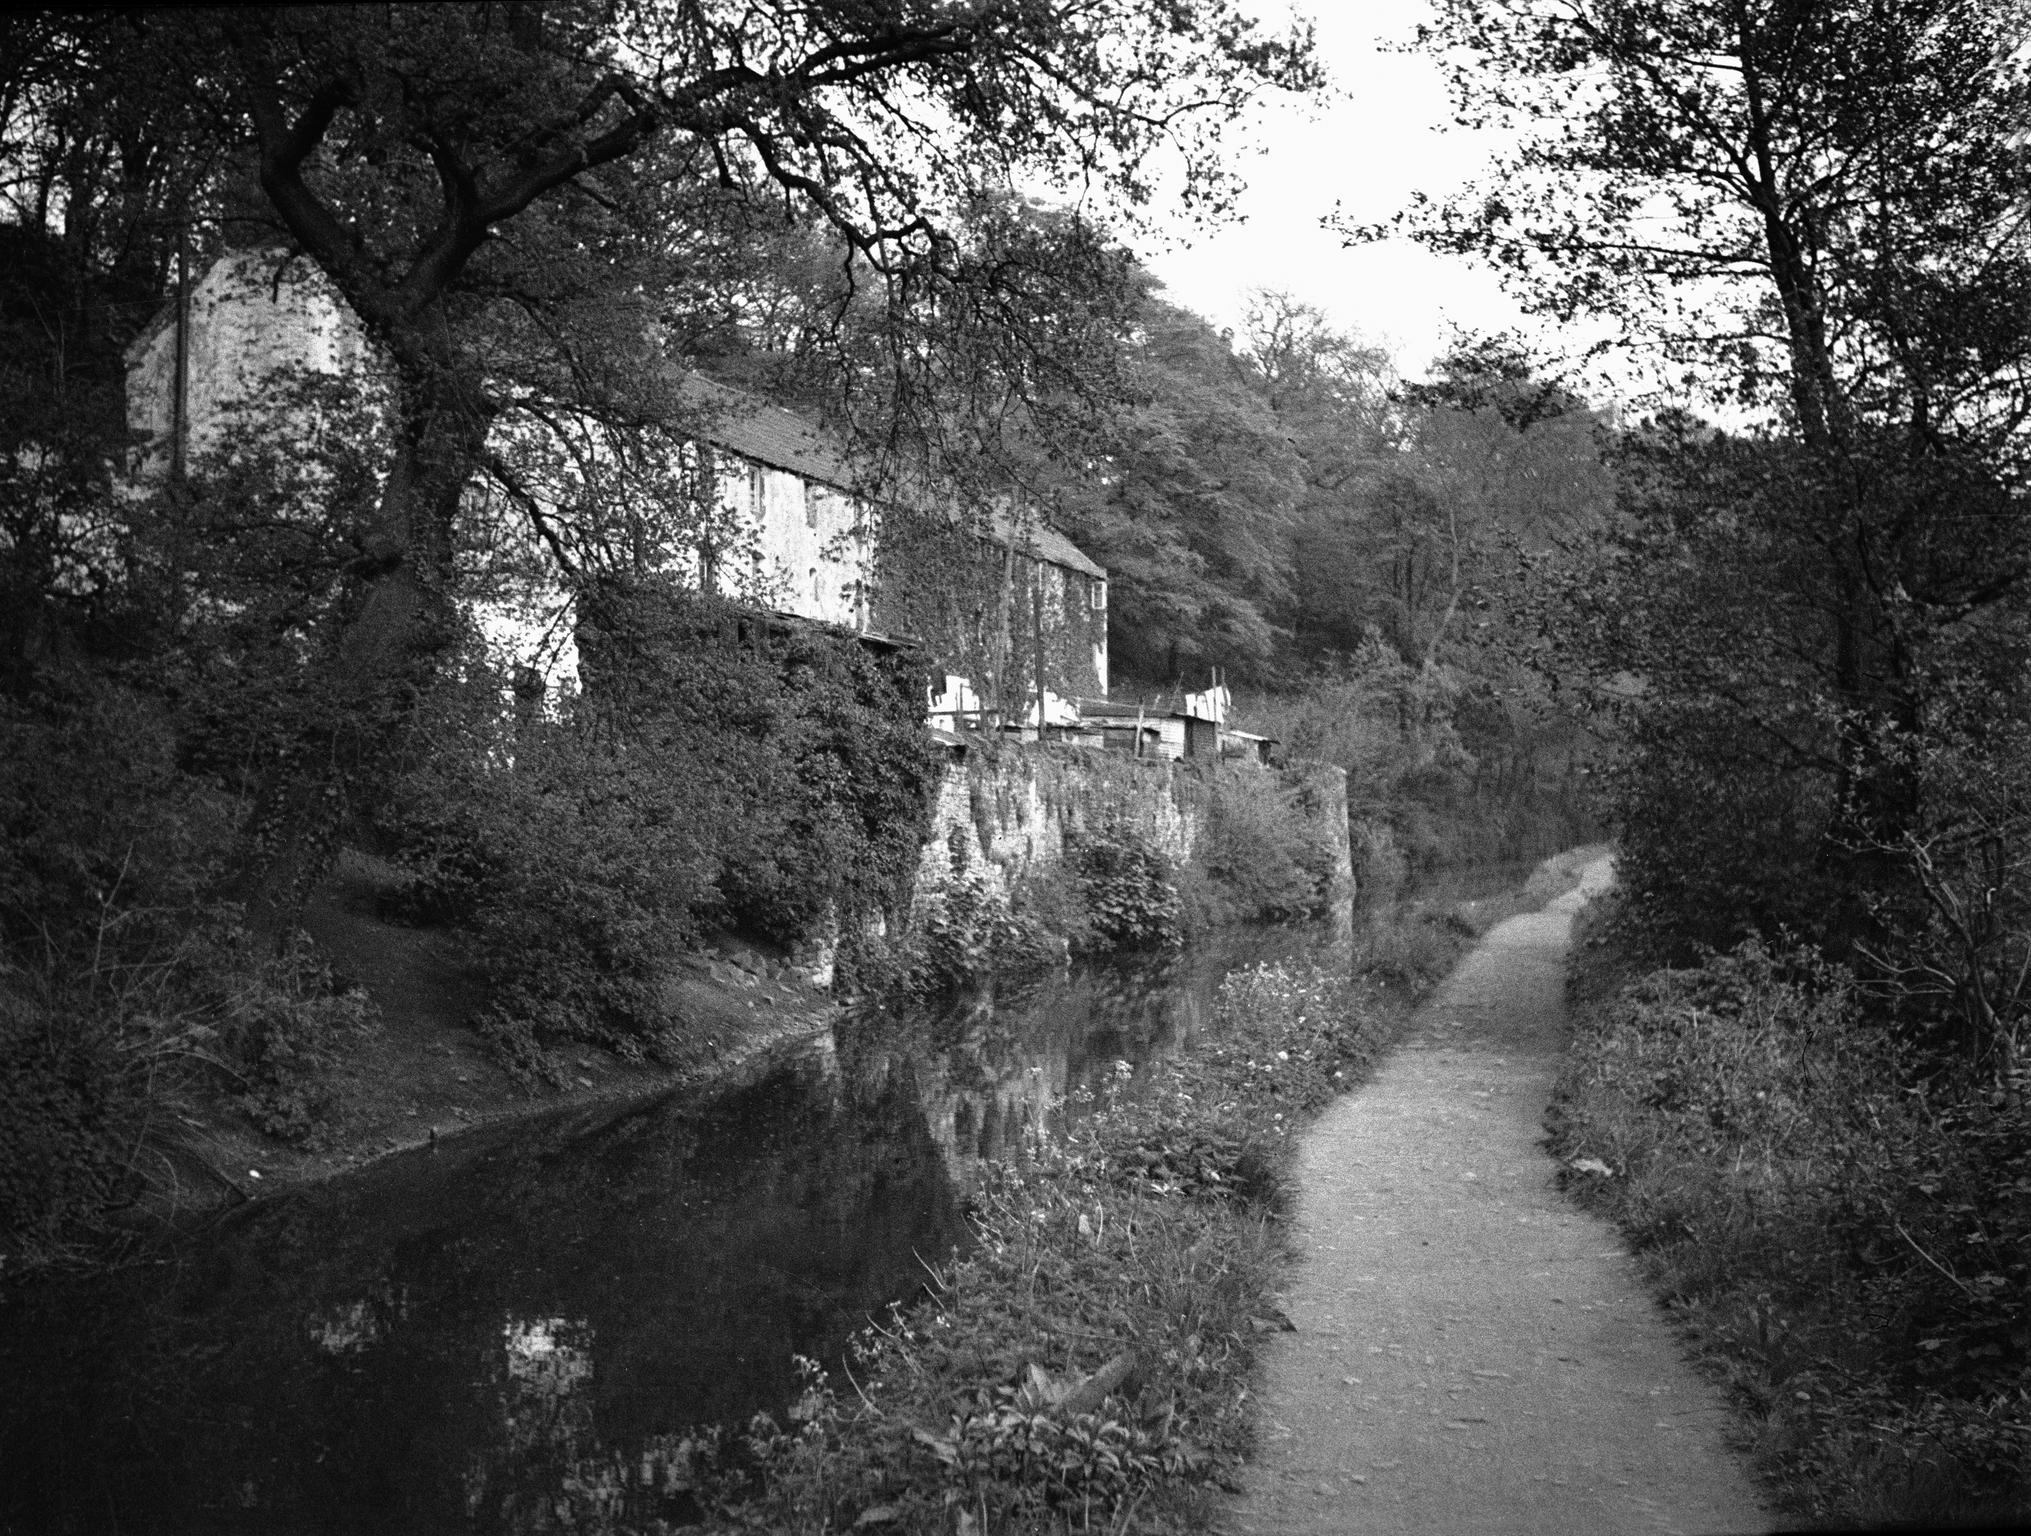 Glamorganshire Canal, negative